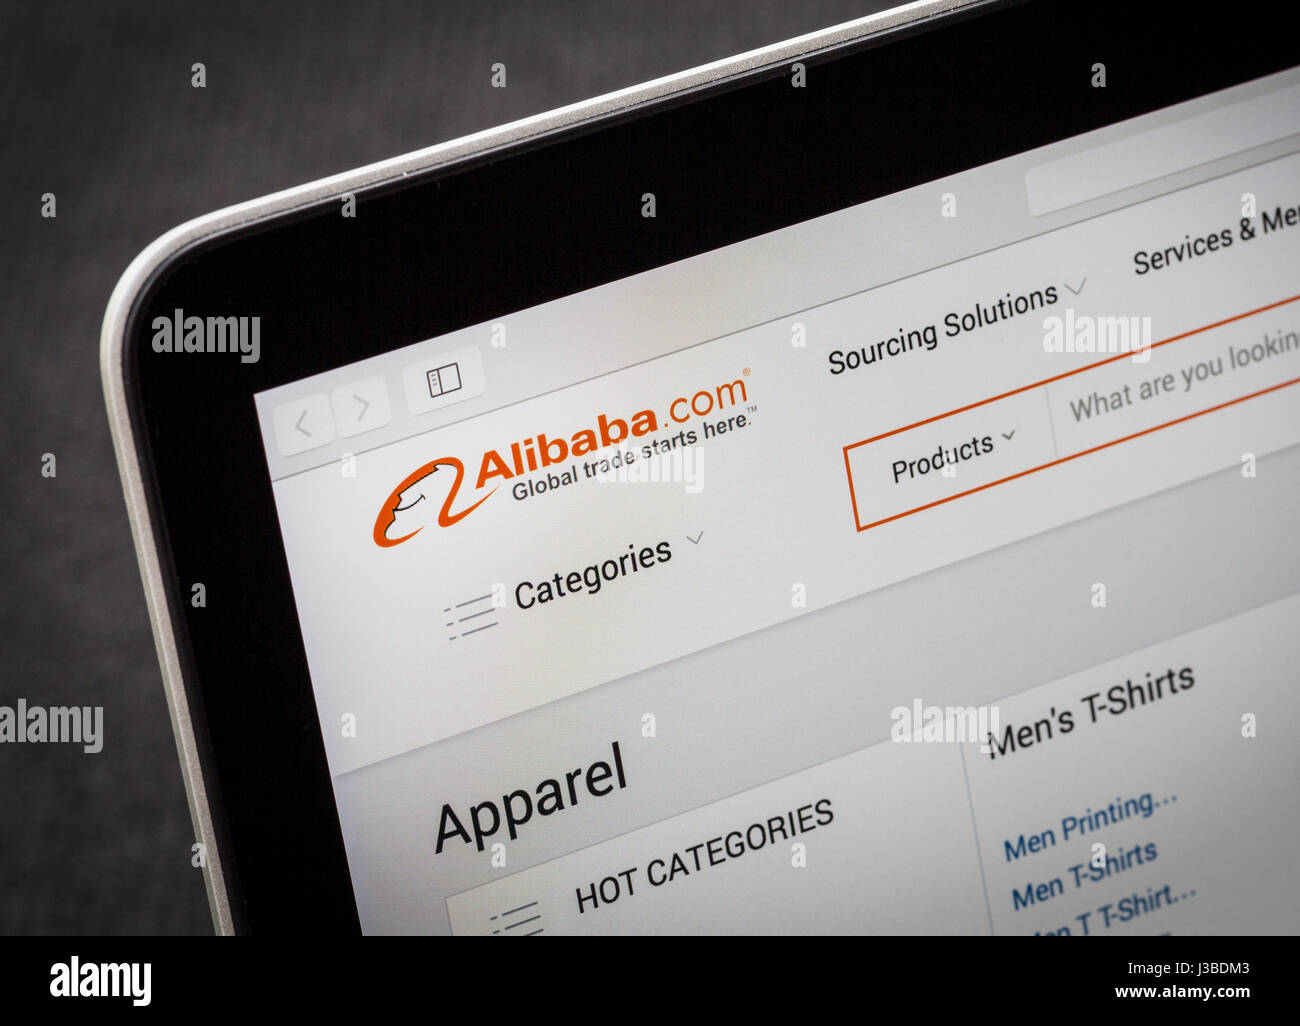 Alibaba website Stock Photo